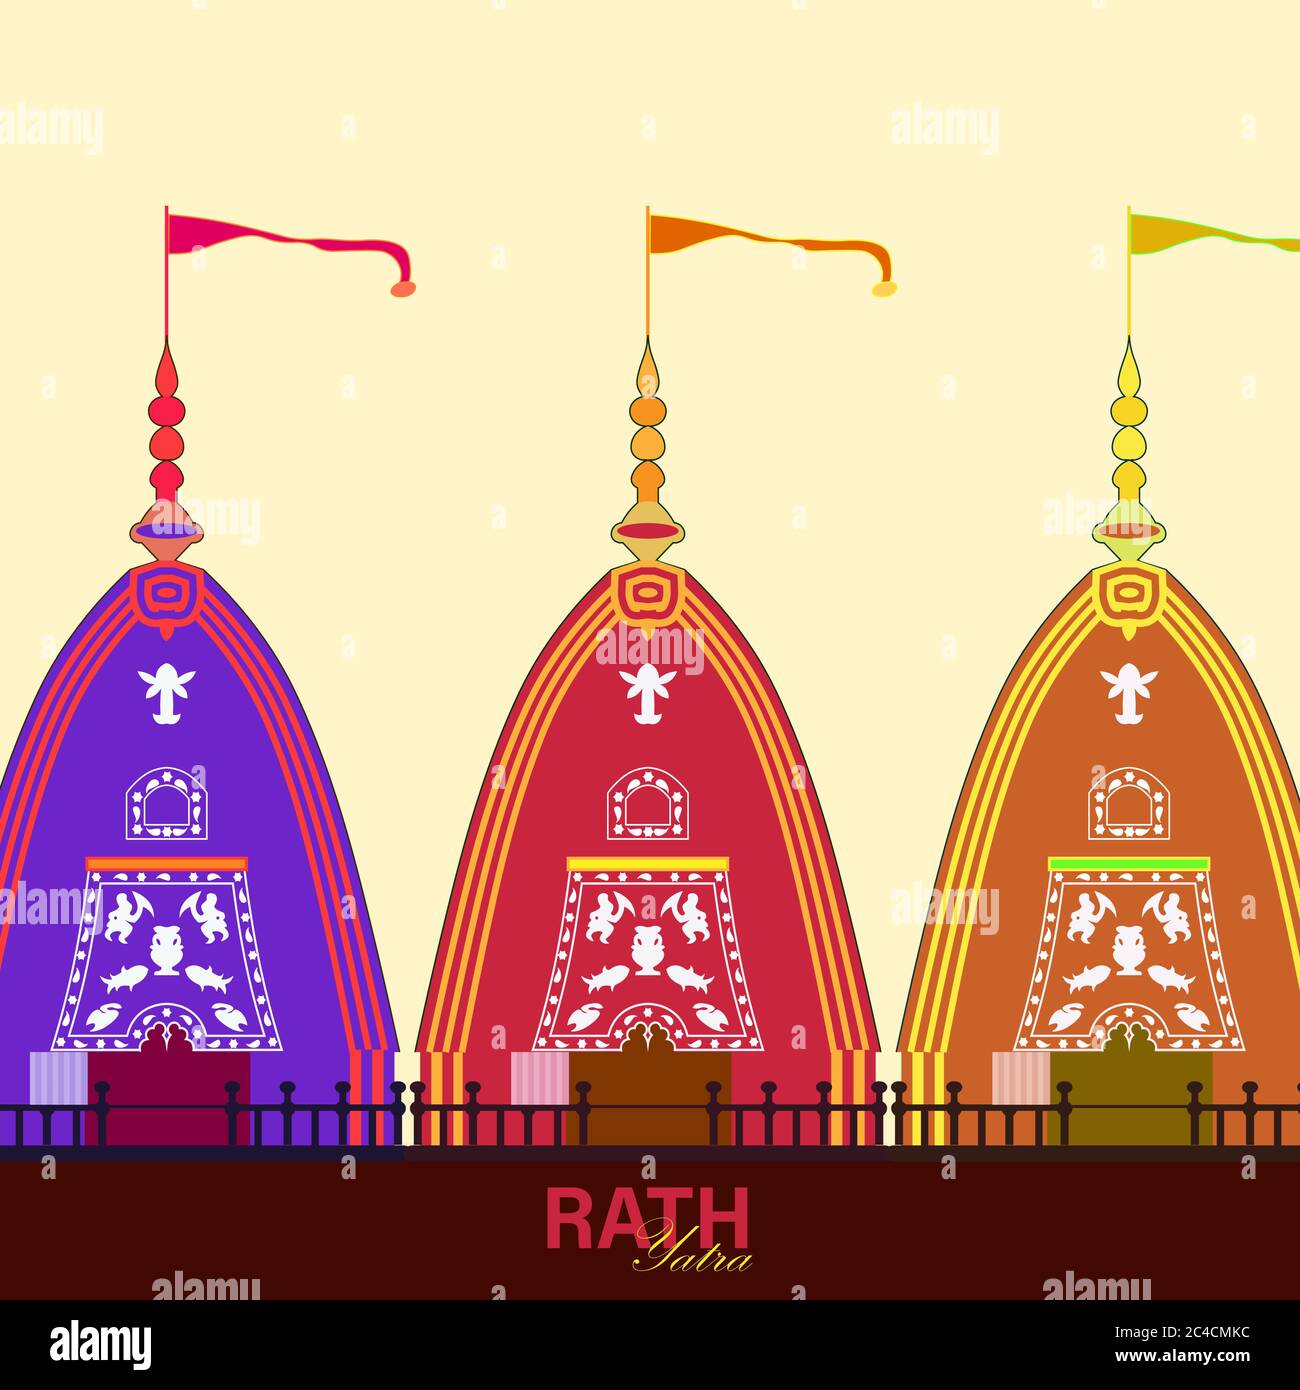 Rath yatra festival Cut Out Stock Images & Pictures - Alamy-saigonsouth.com.vn